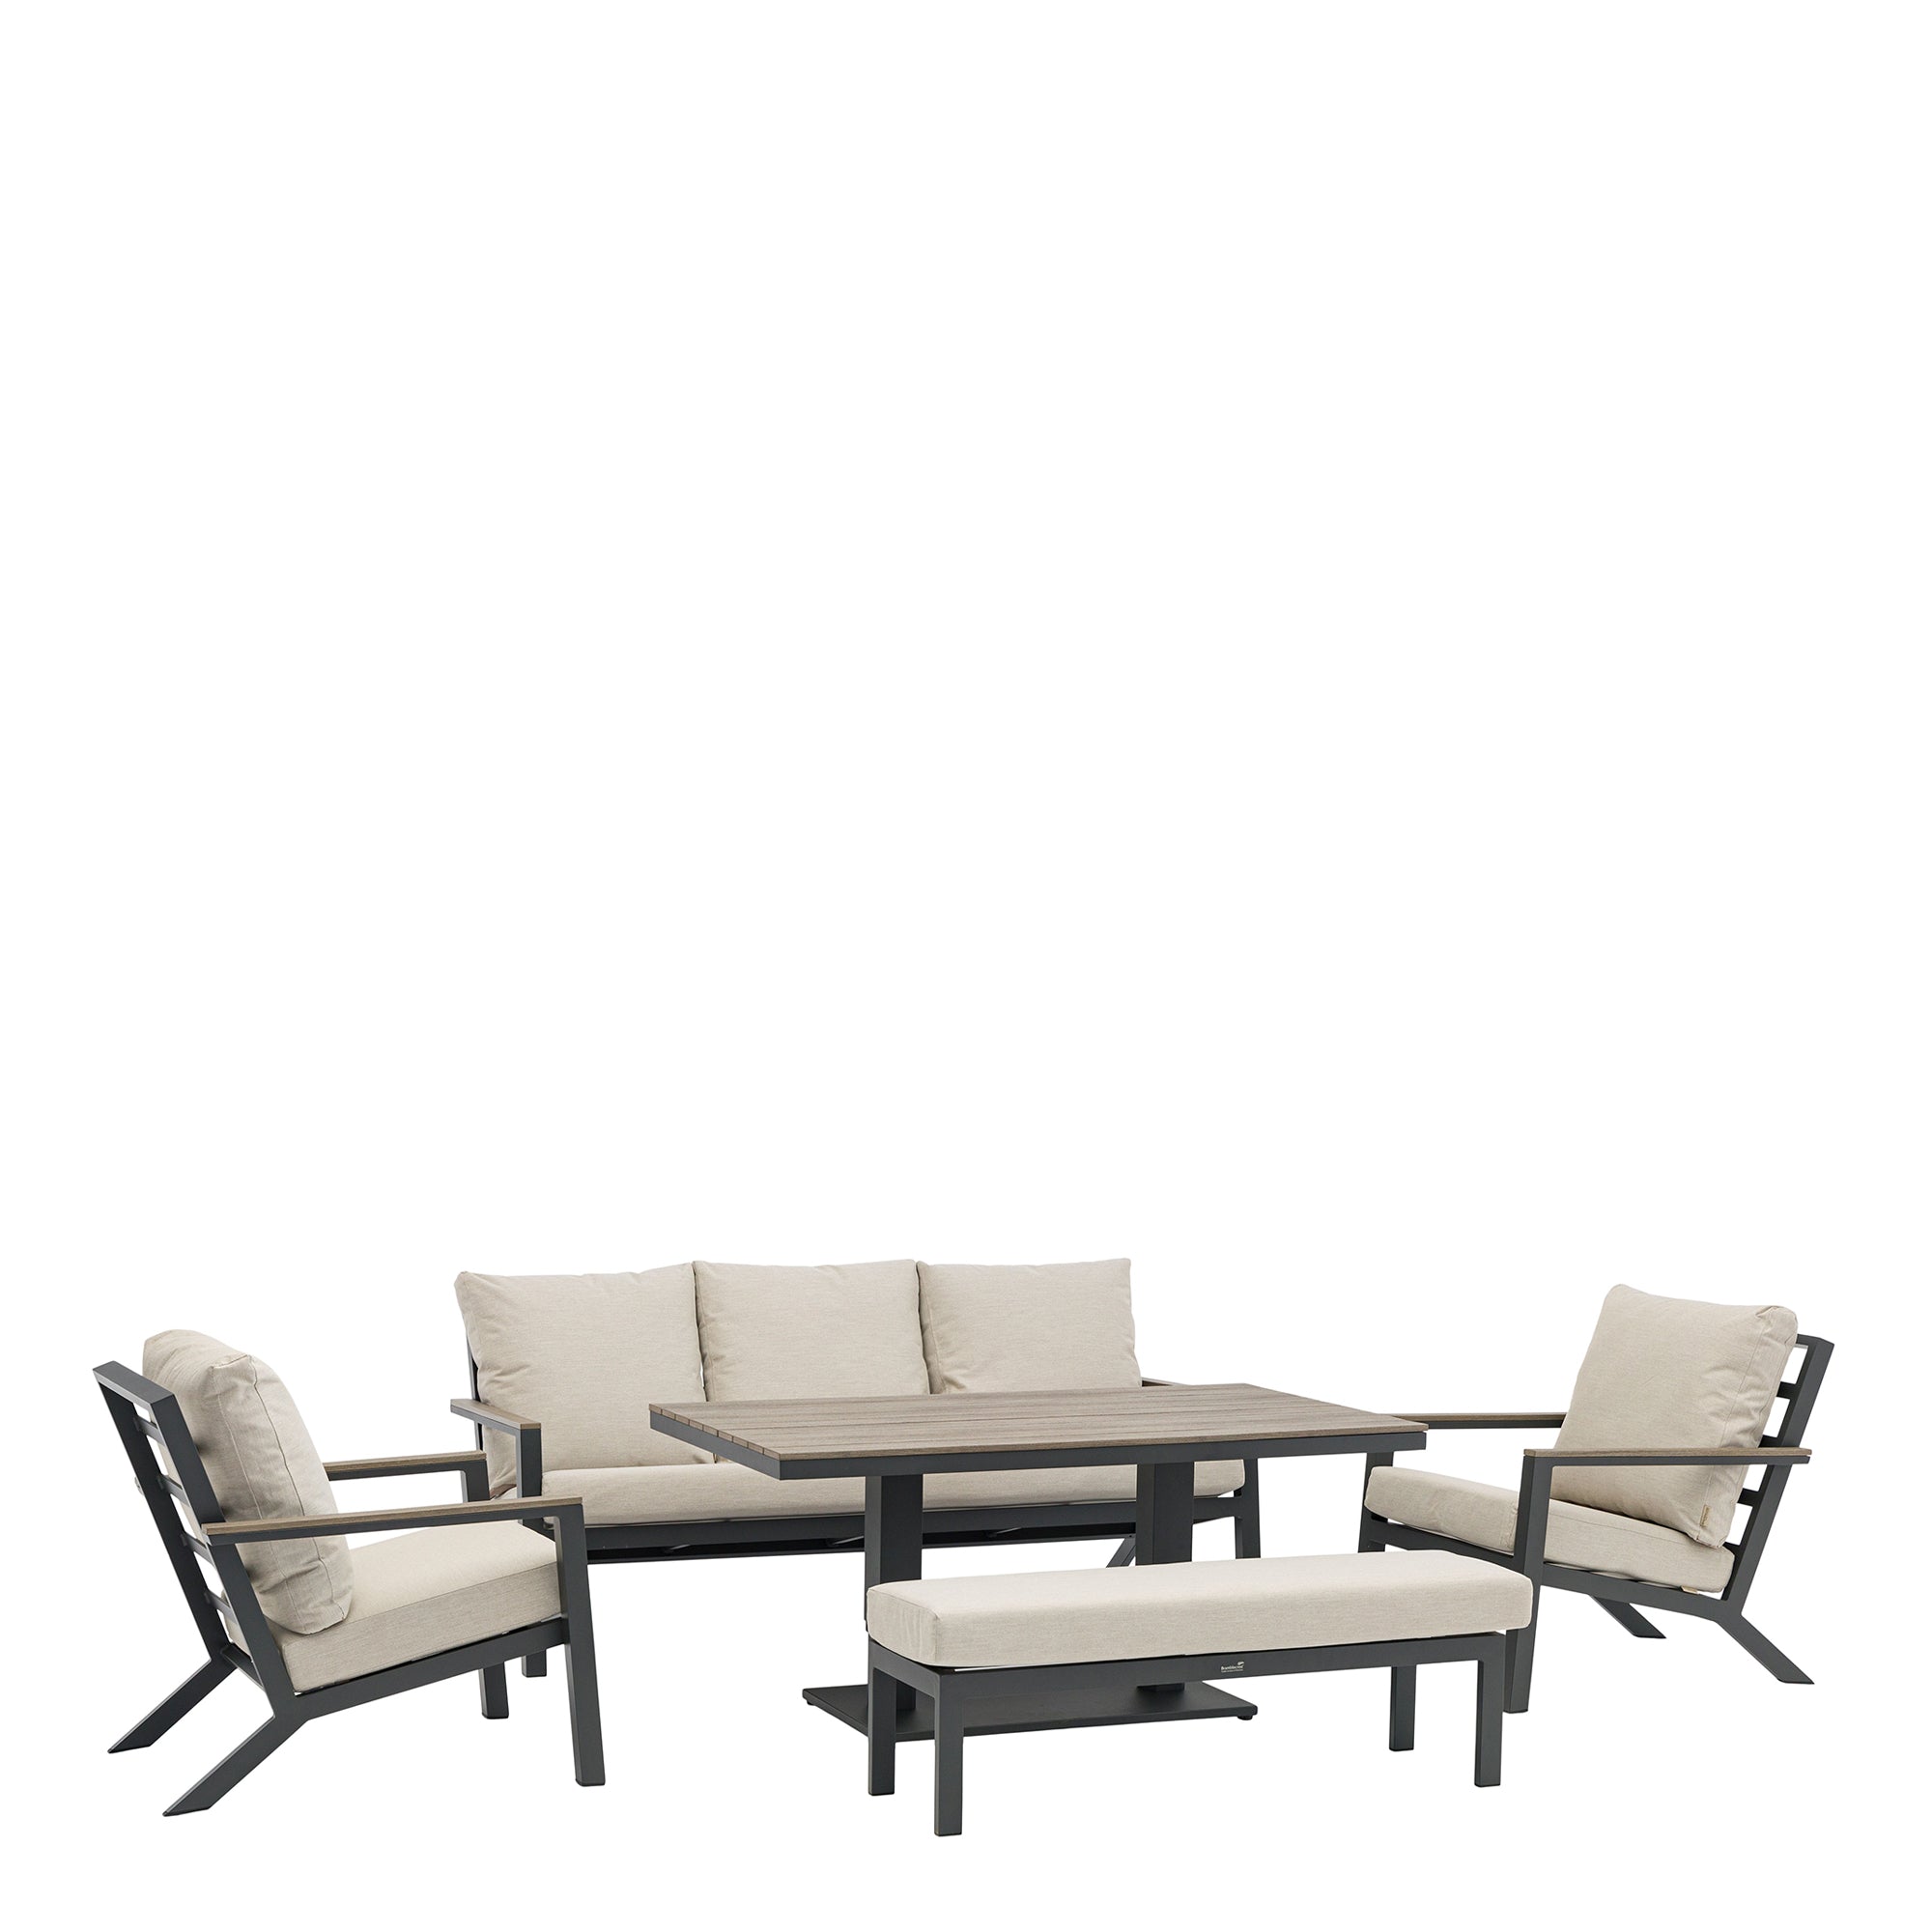 Buenavista - 3 Seat Sofa Dining Set With Rectangular Adjustable Piston Table In Eco Fawn